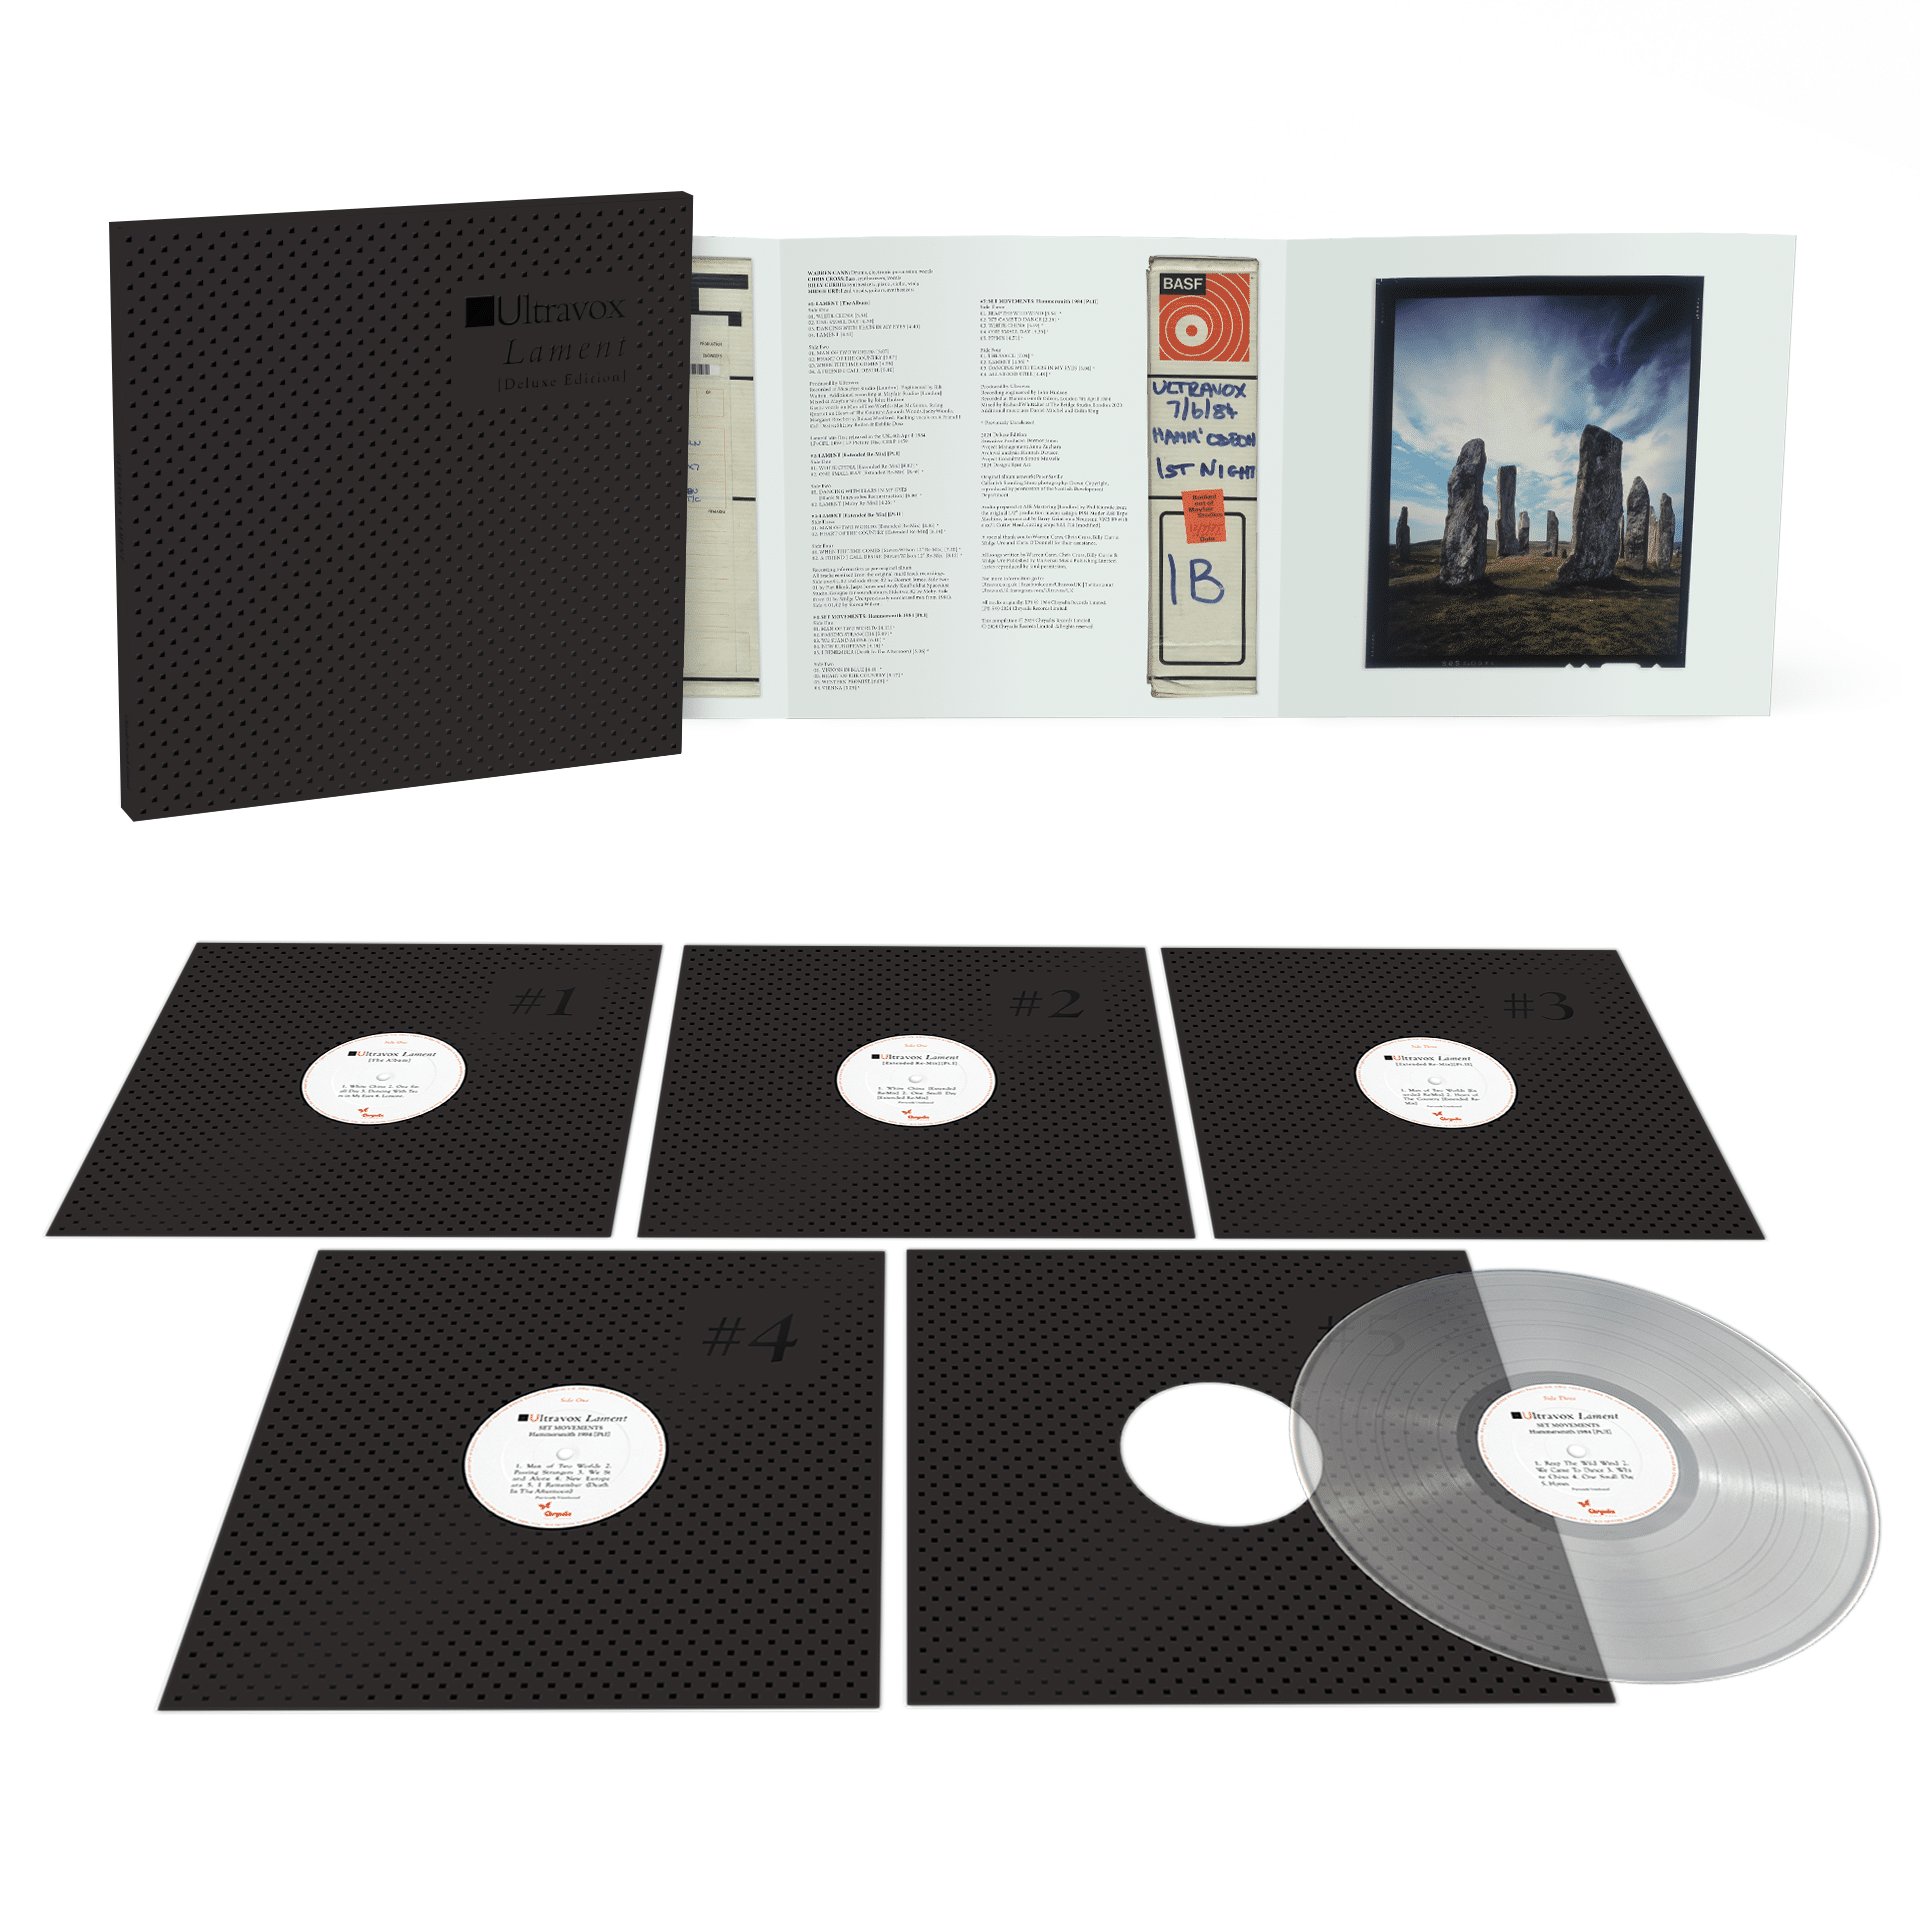 Ultravox - Lament [Deluxe Edition]: 40th Anniversary Limited Edition